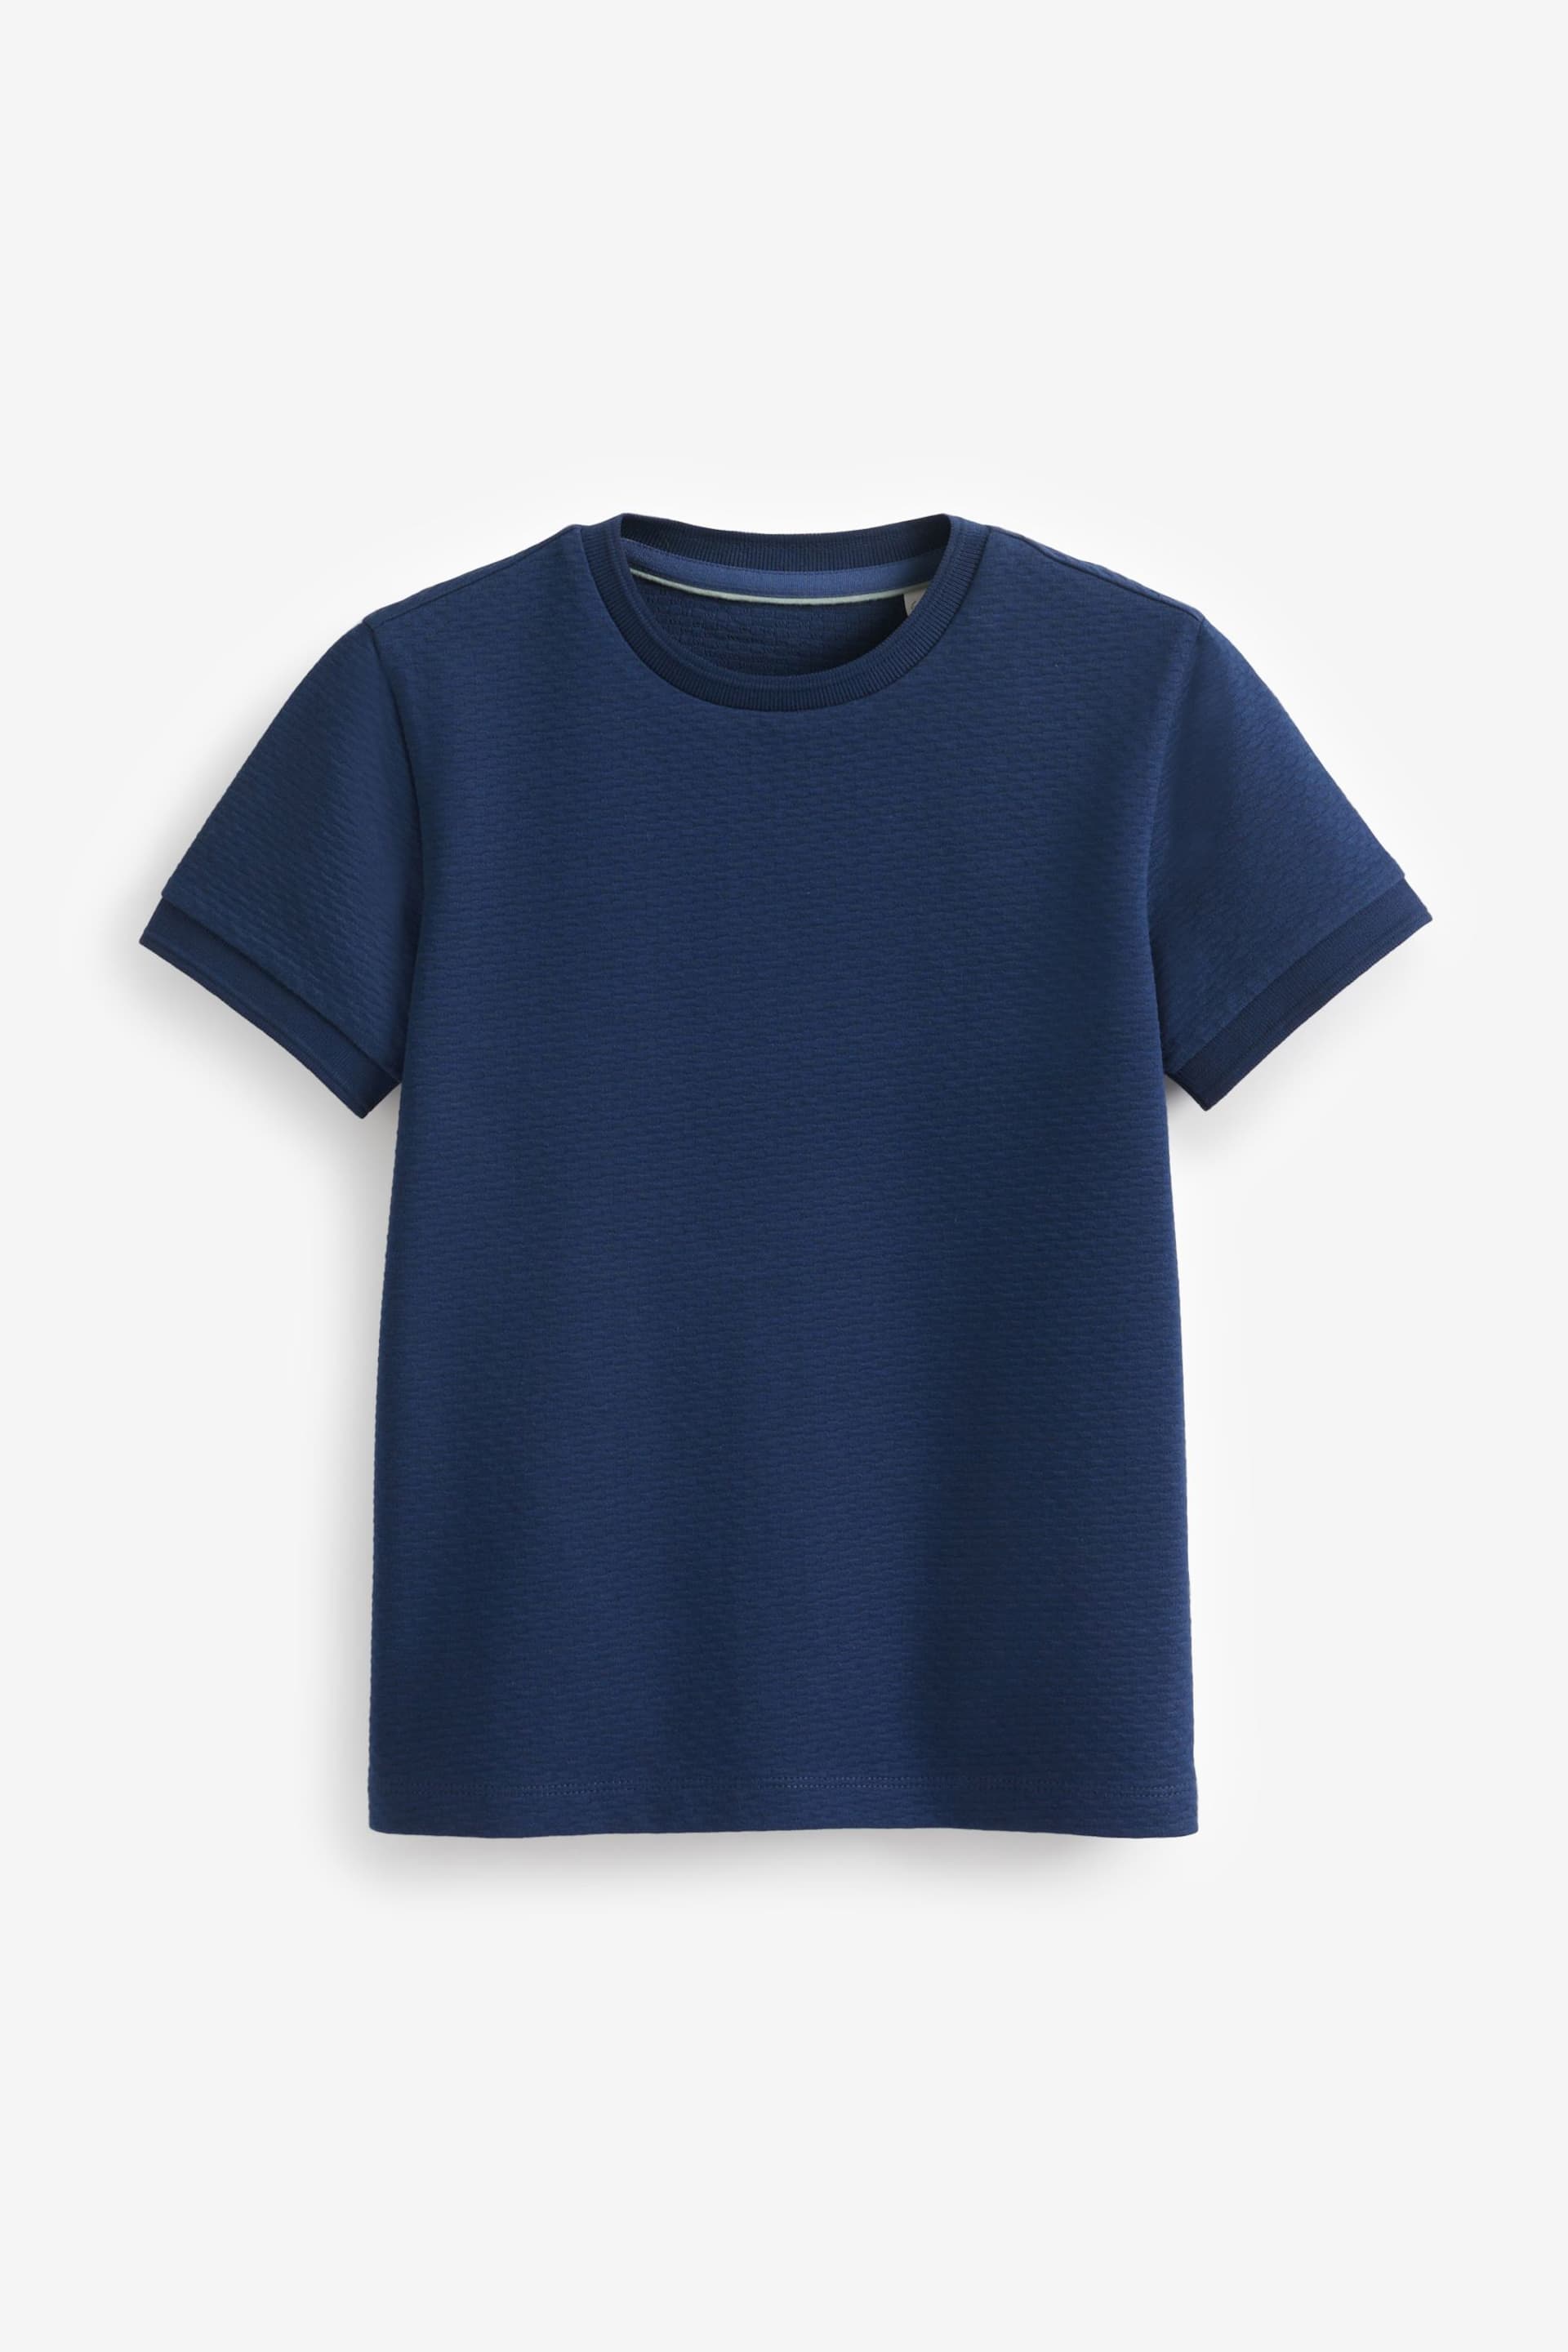 Navy Blue Short Sleeve Textured T-Shirt (3-16yrs) - Image 1 of 3